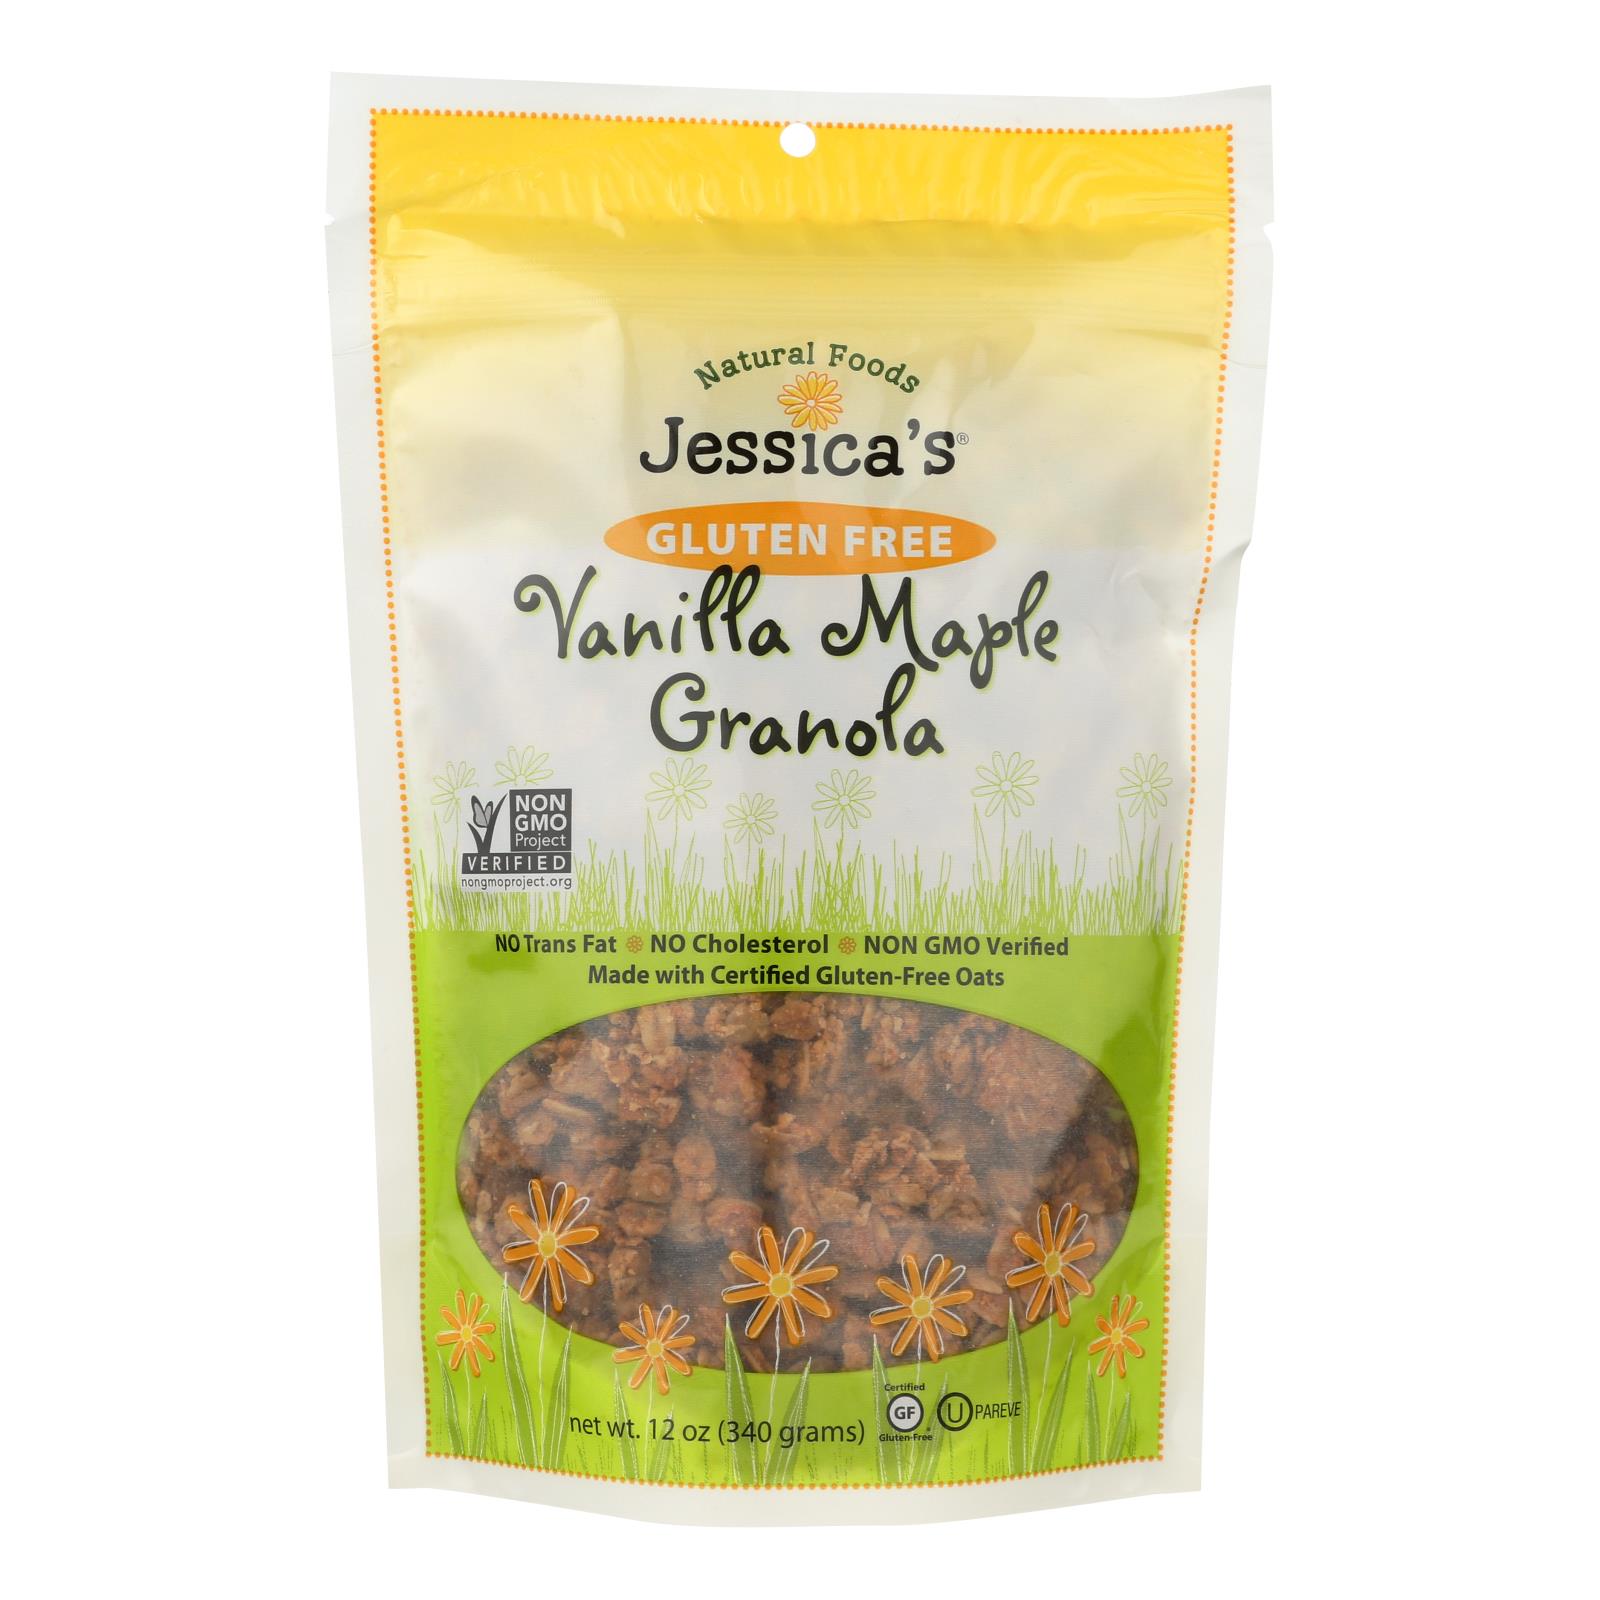 Jessica's Natural Foods Gluten Free Vanilla Maple Granola - 12개 묶음상품 - 11 OZ